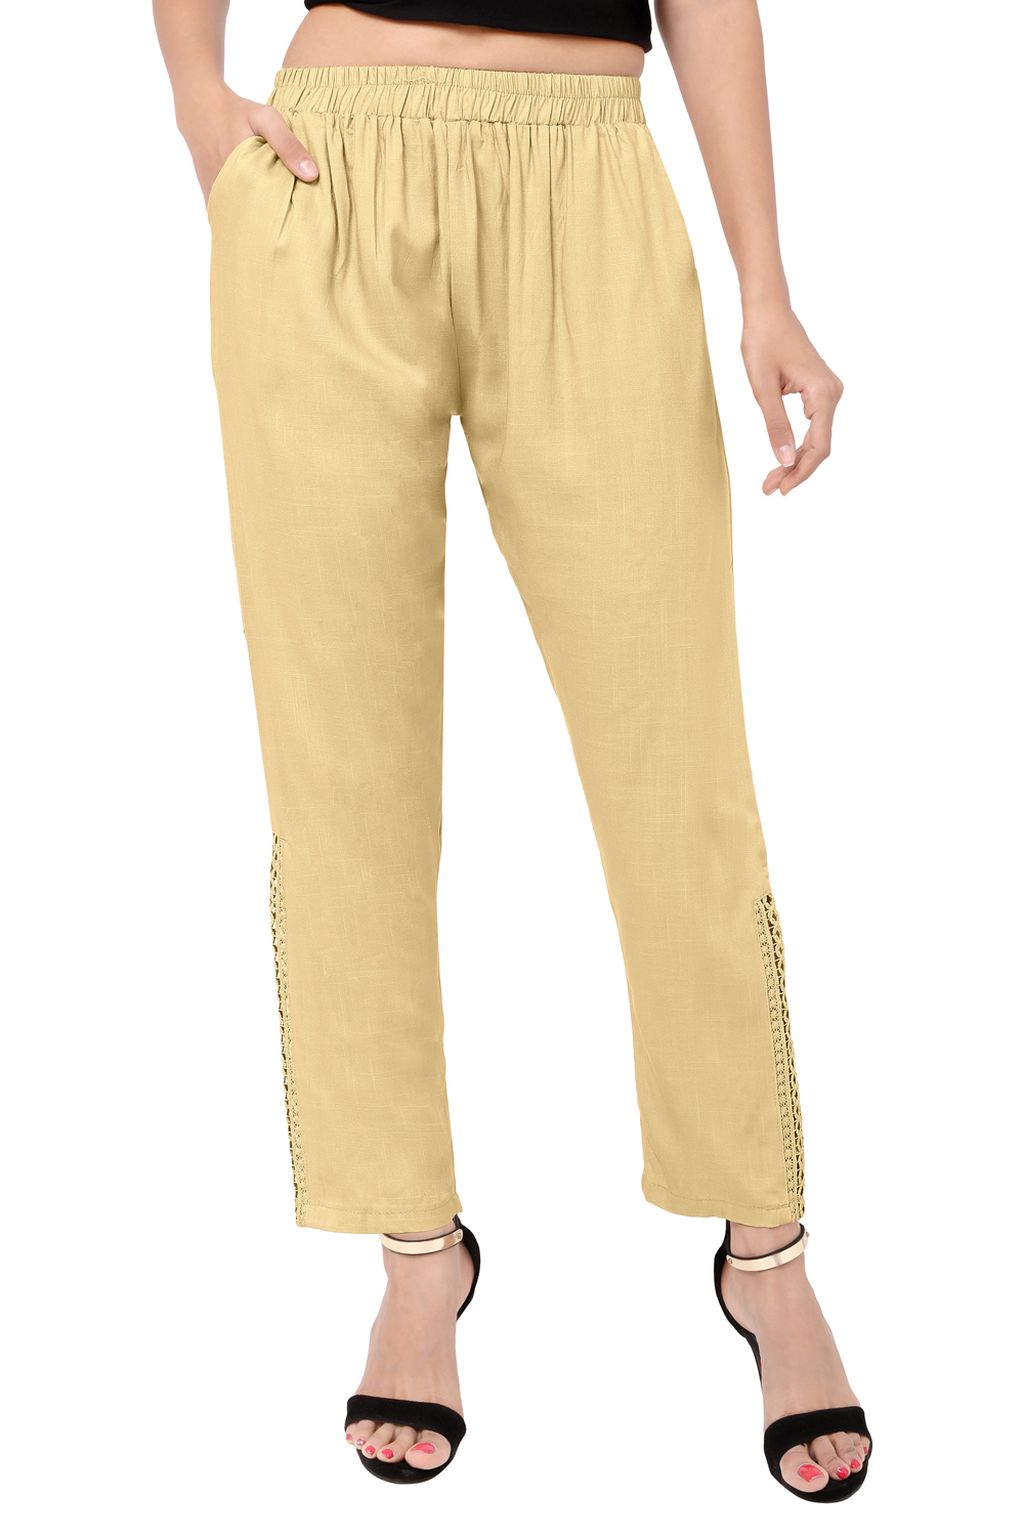 Cotton Pants Design For Ladies | Maharani Designer Boutique